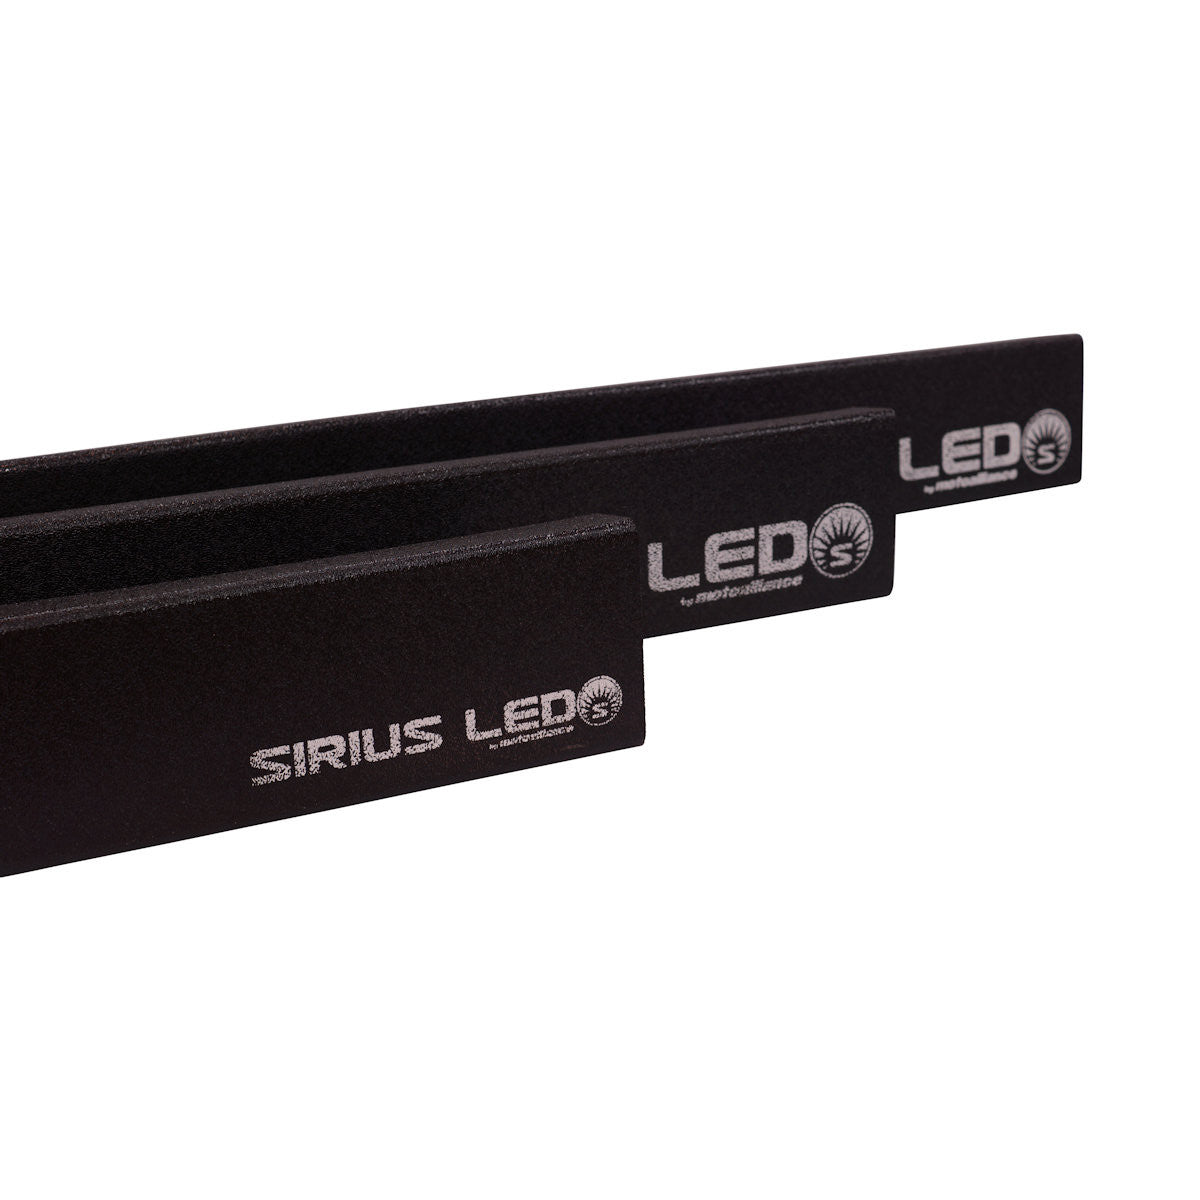 Sirius LED Double Row Light Bar Cover Plate